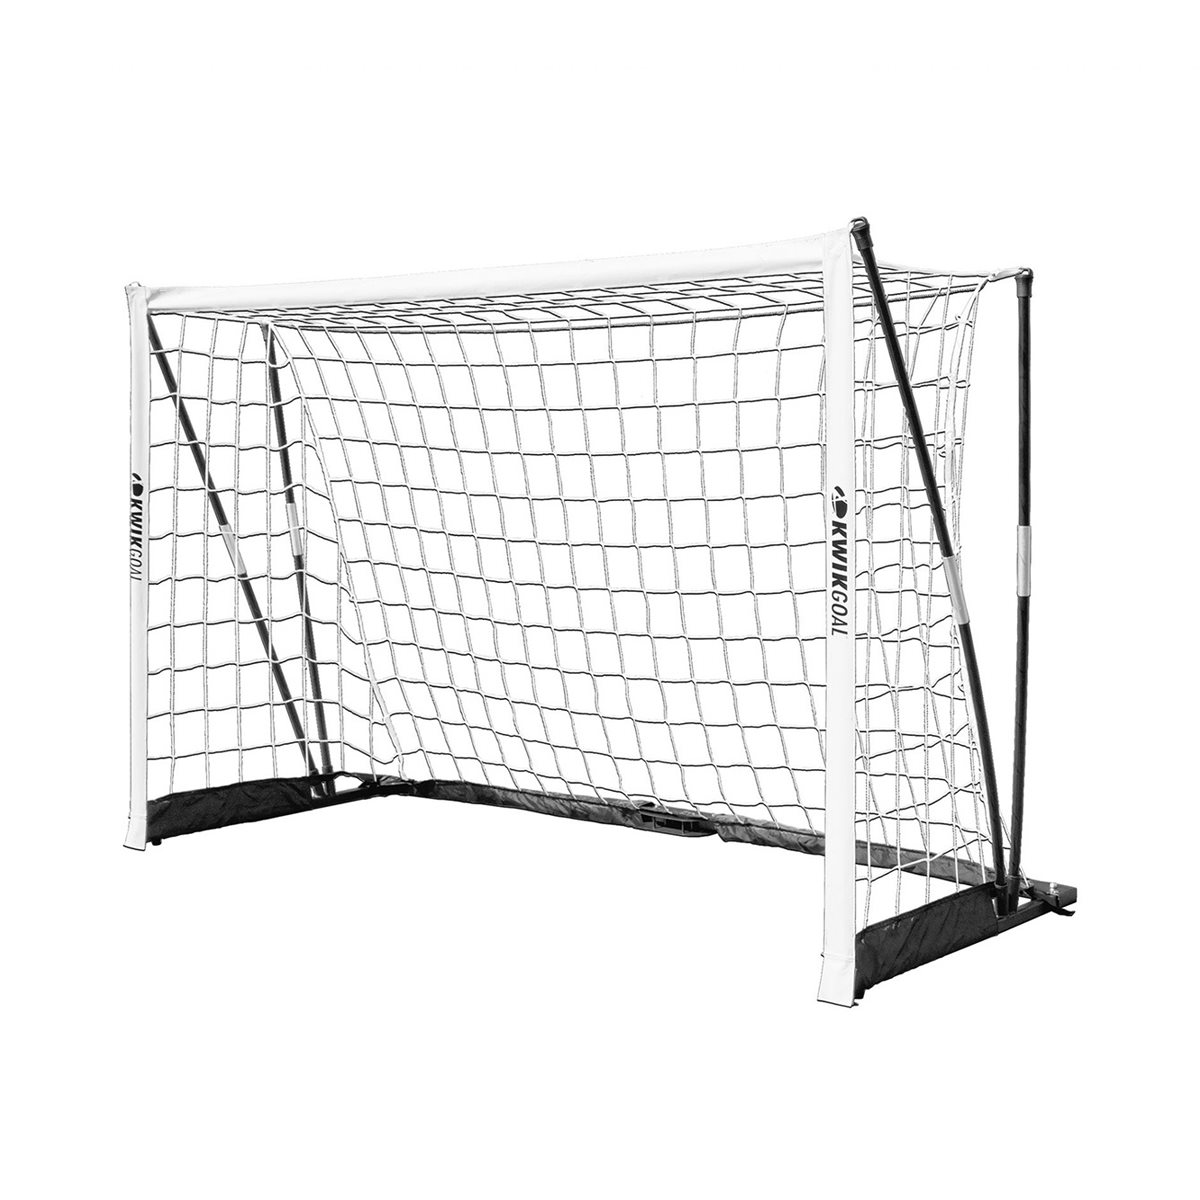 Portable Kwik Flex Goal, 6' x 4